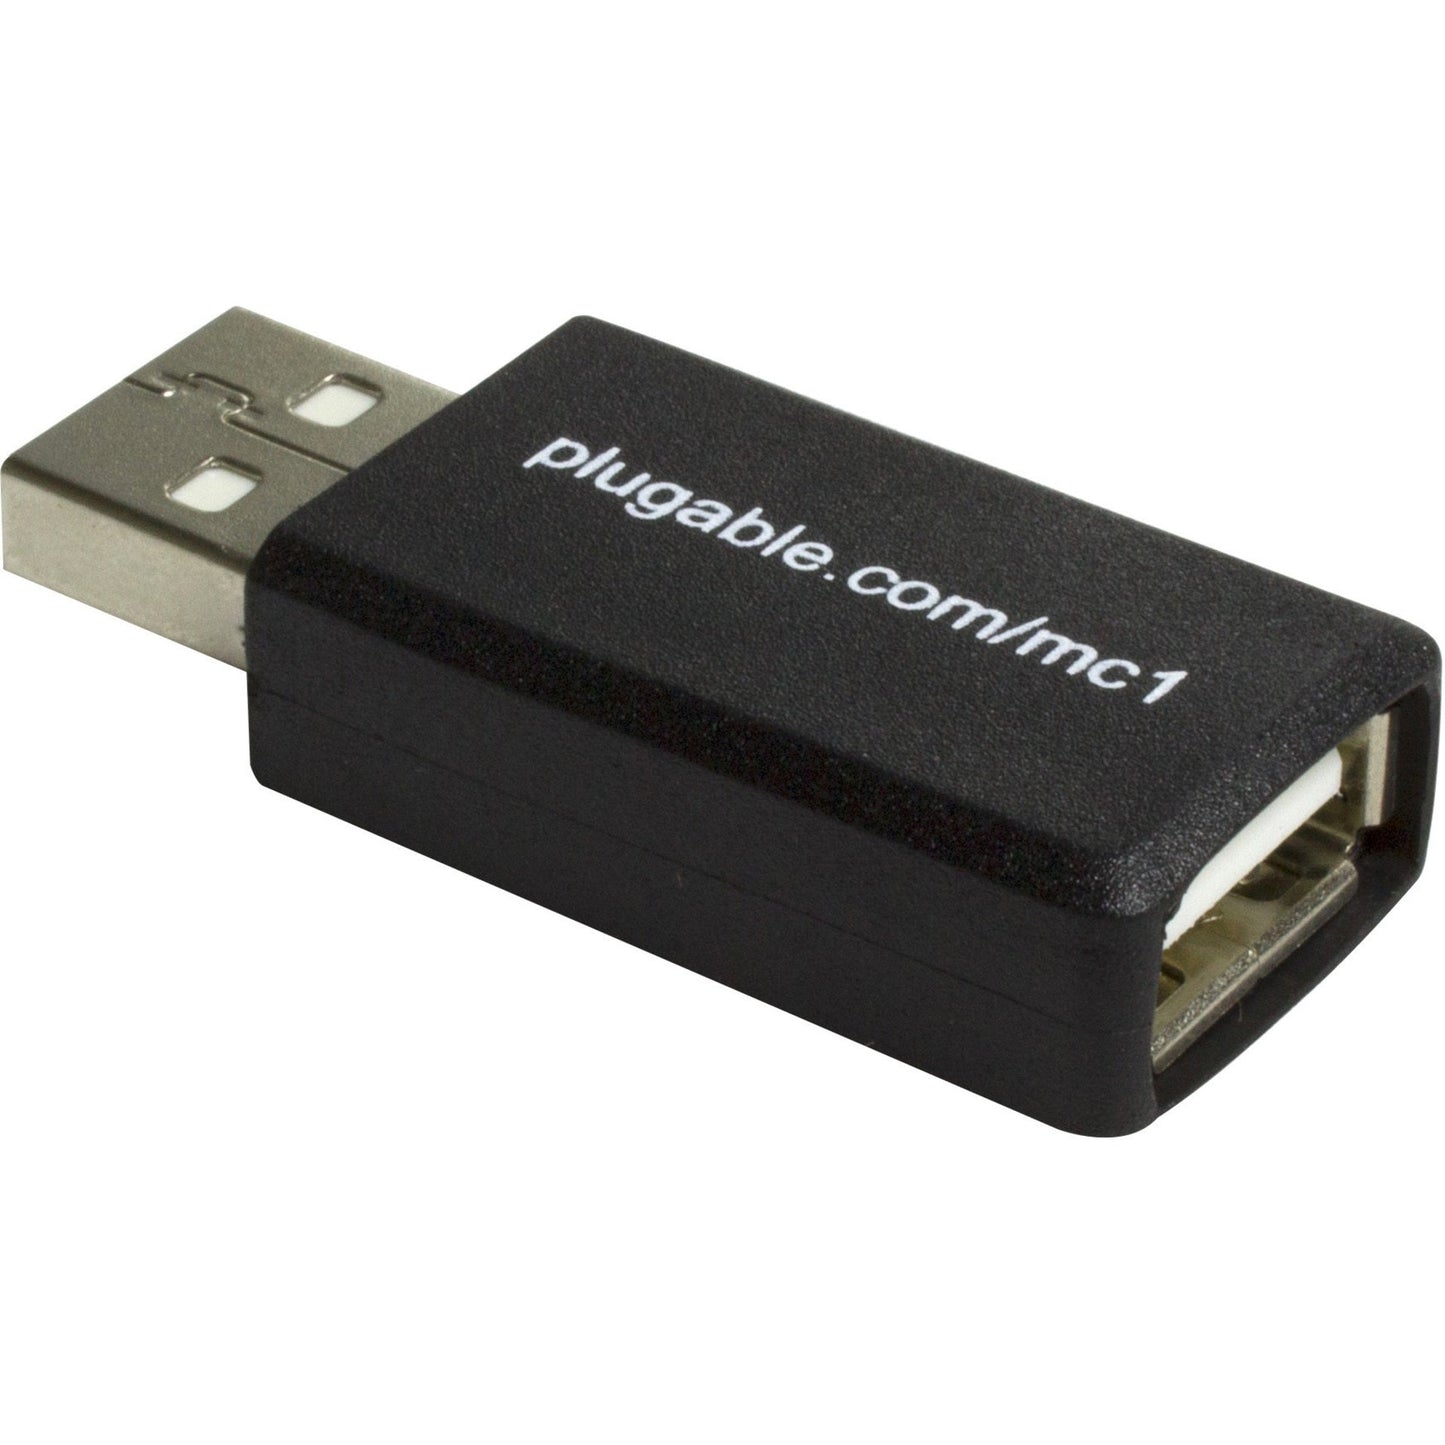 Plugable USB Data Blocker Protect Against Juice Jacking